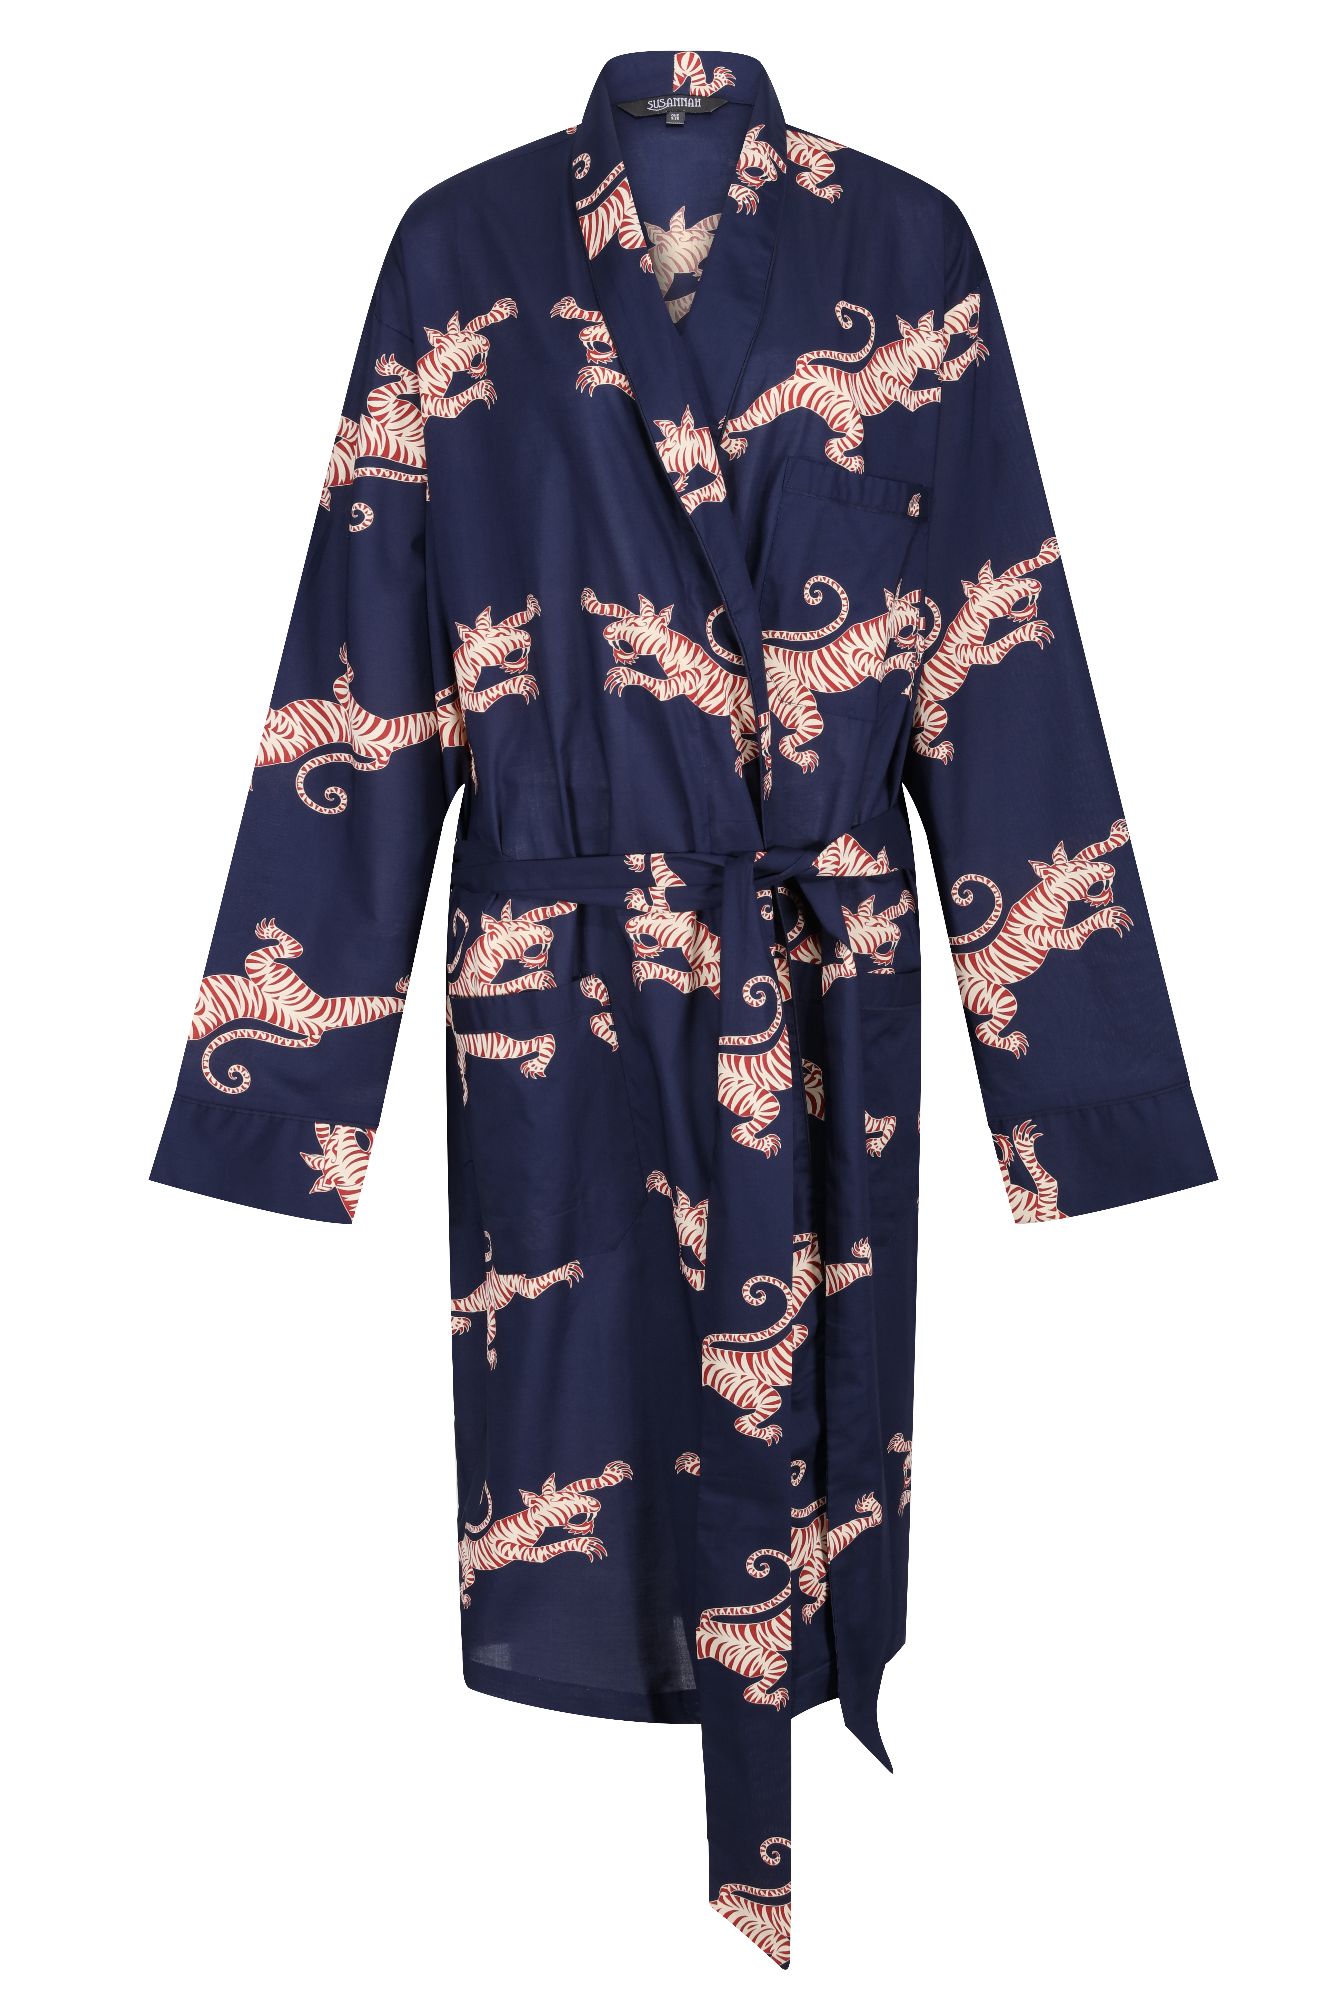 Susannah Cotton Men's Kimono Robe: Fightin Tigers Red & Cream on Dark Blue